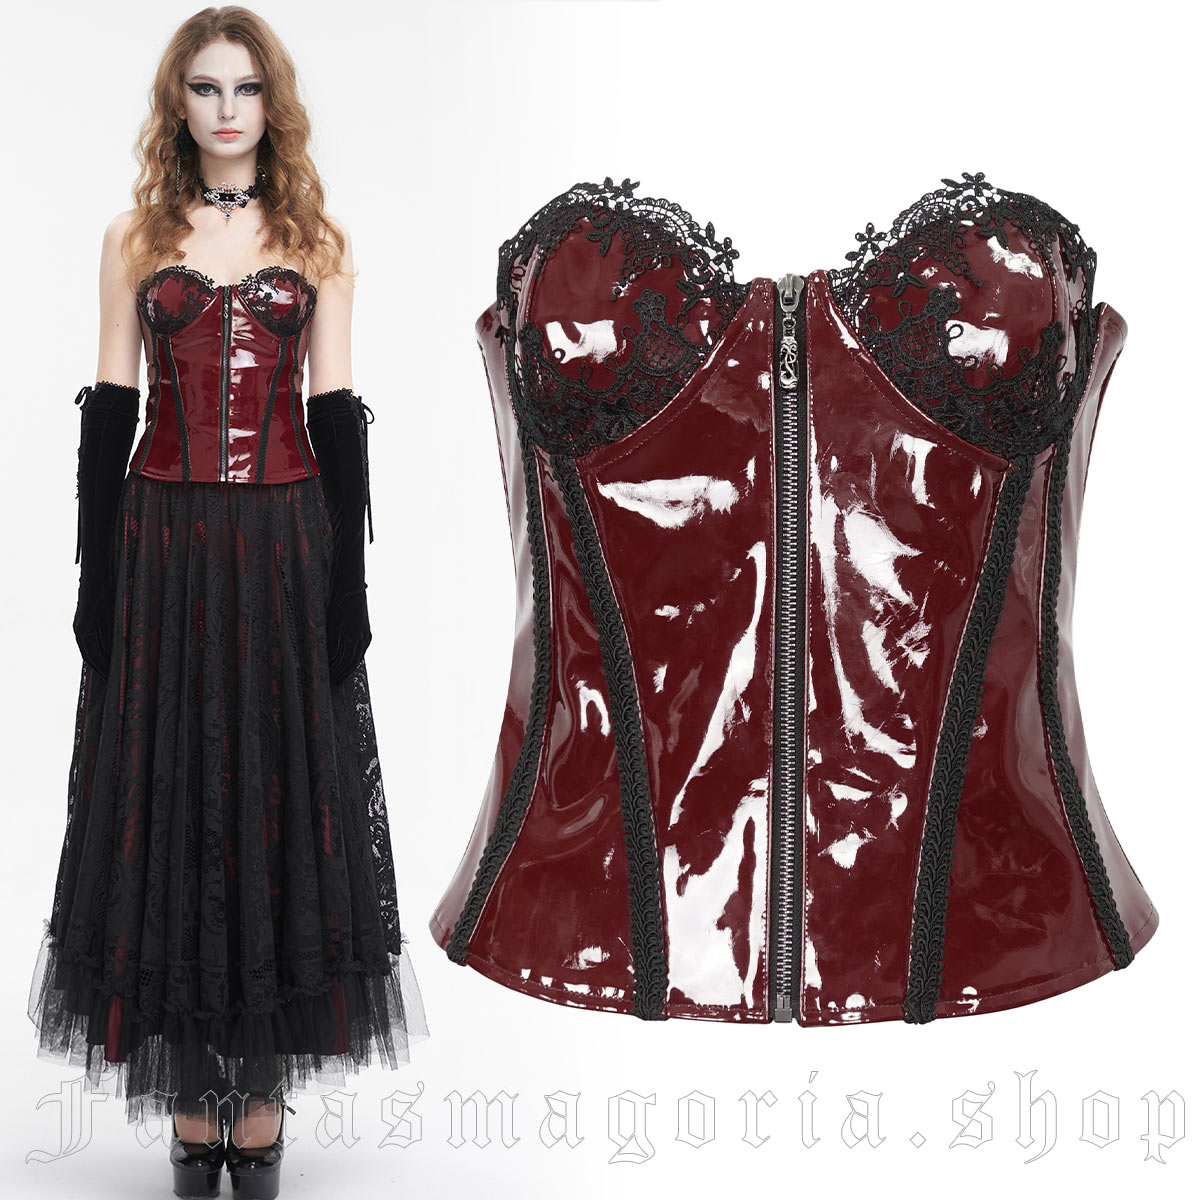 PVC corset with lace up back, plus size